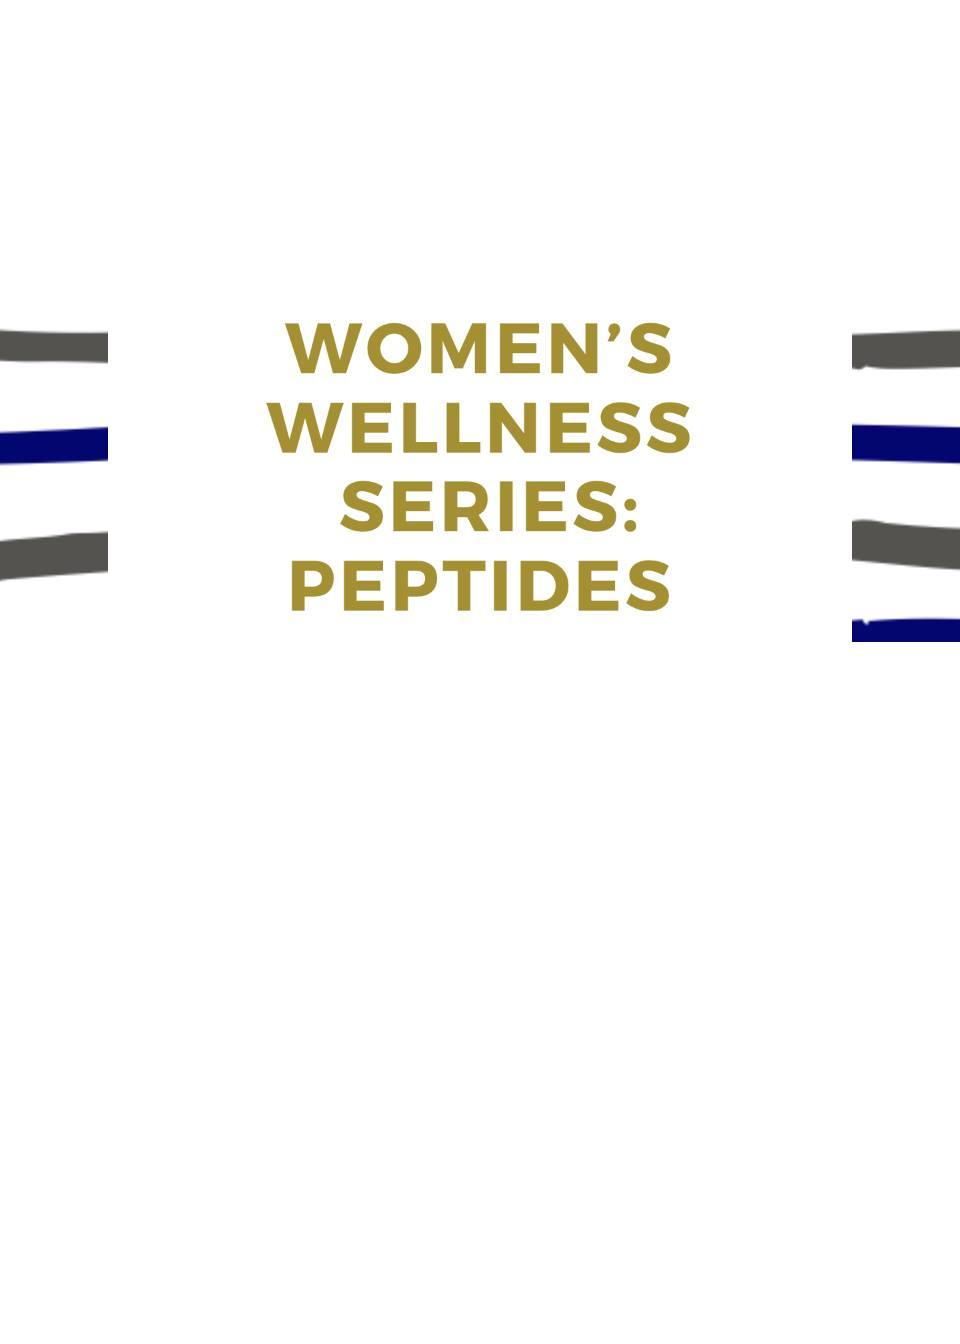 Women's Wellness Series: Peptides!